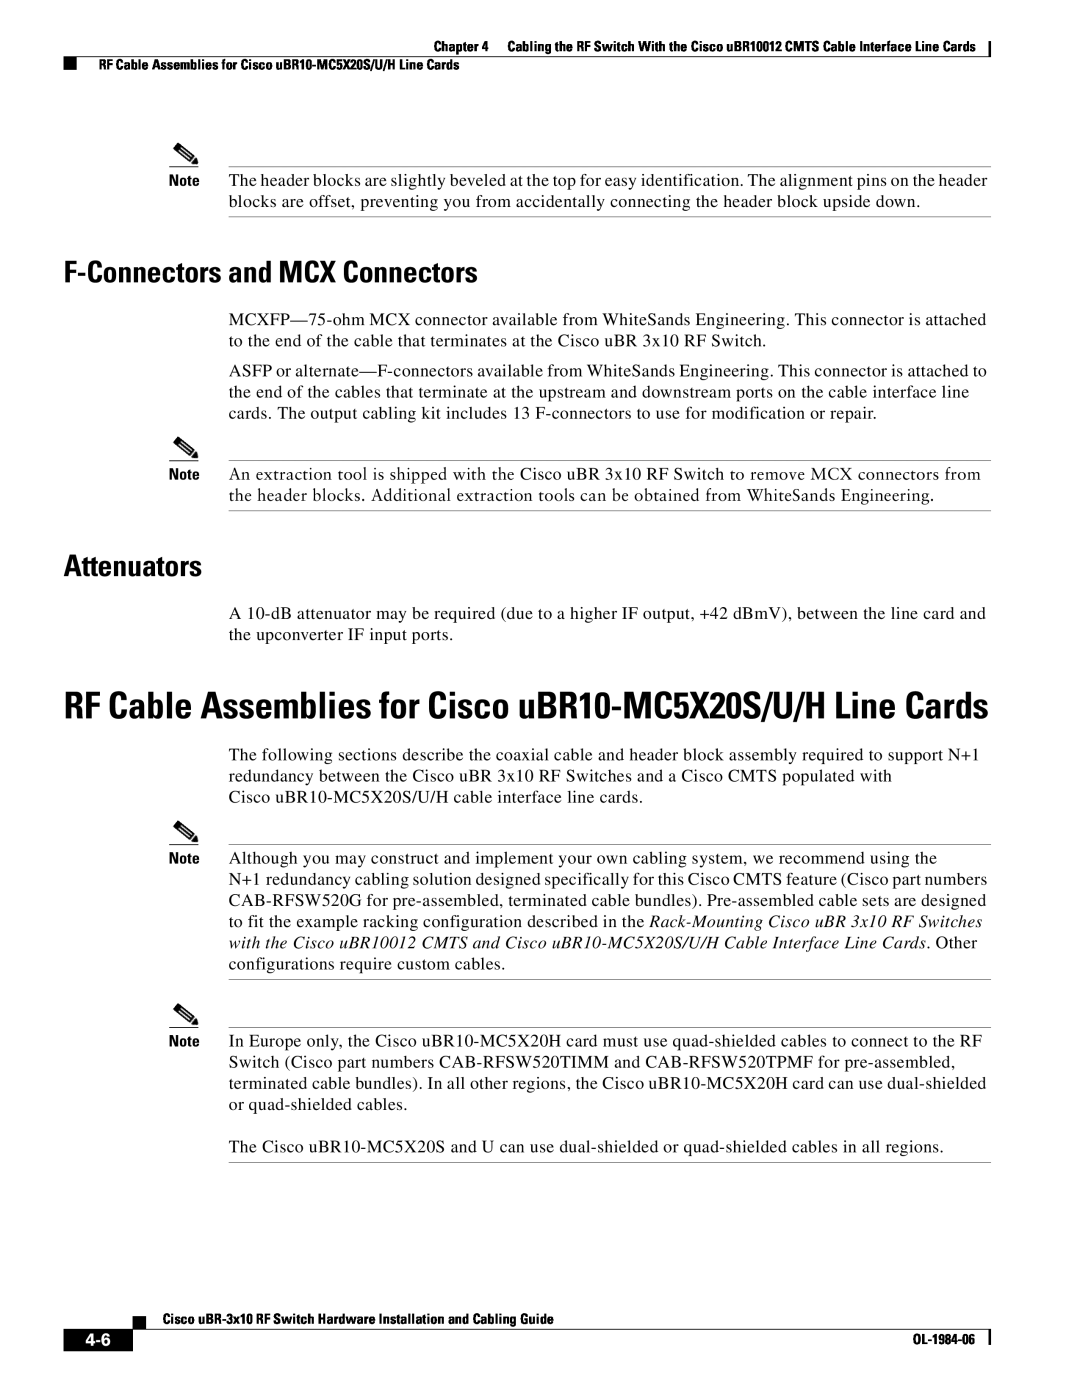 Cisco Systems UBR-3X10 manual RF Cable Assemblies for Cisco uBR10-MC5X20S/U/H Line Cards, F-Connectors and MCX Connectors 